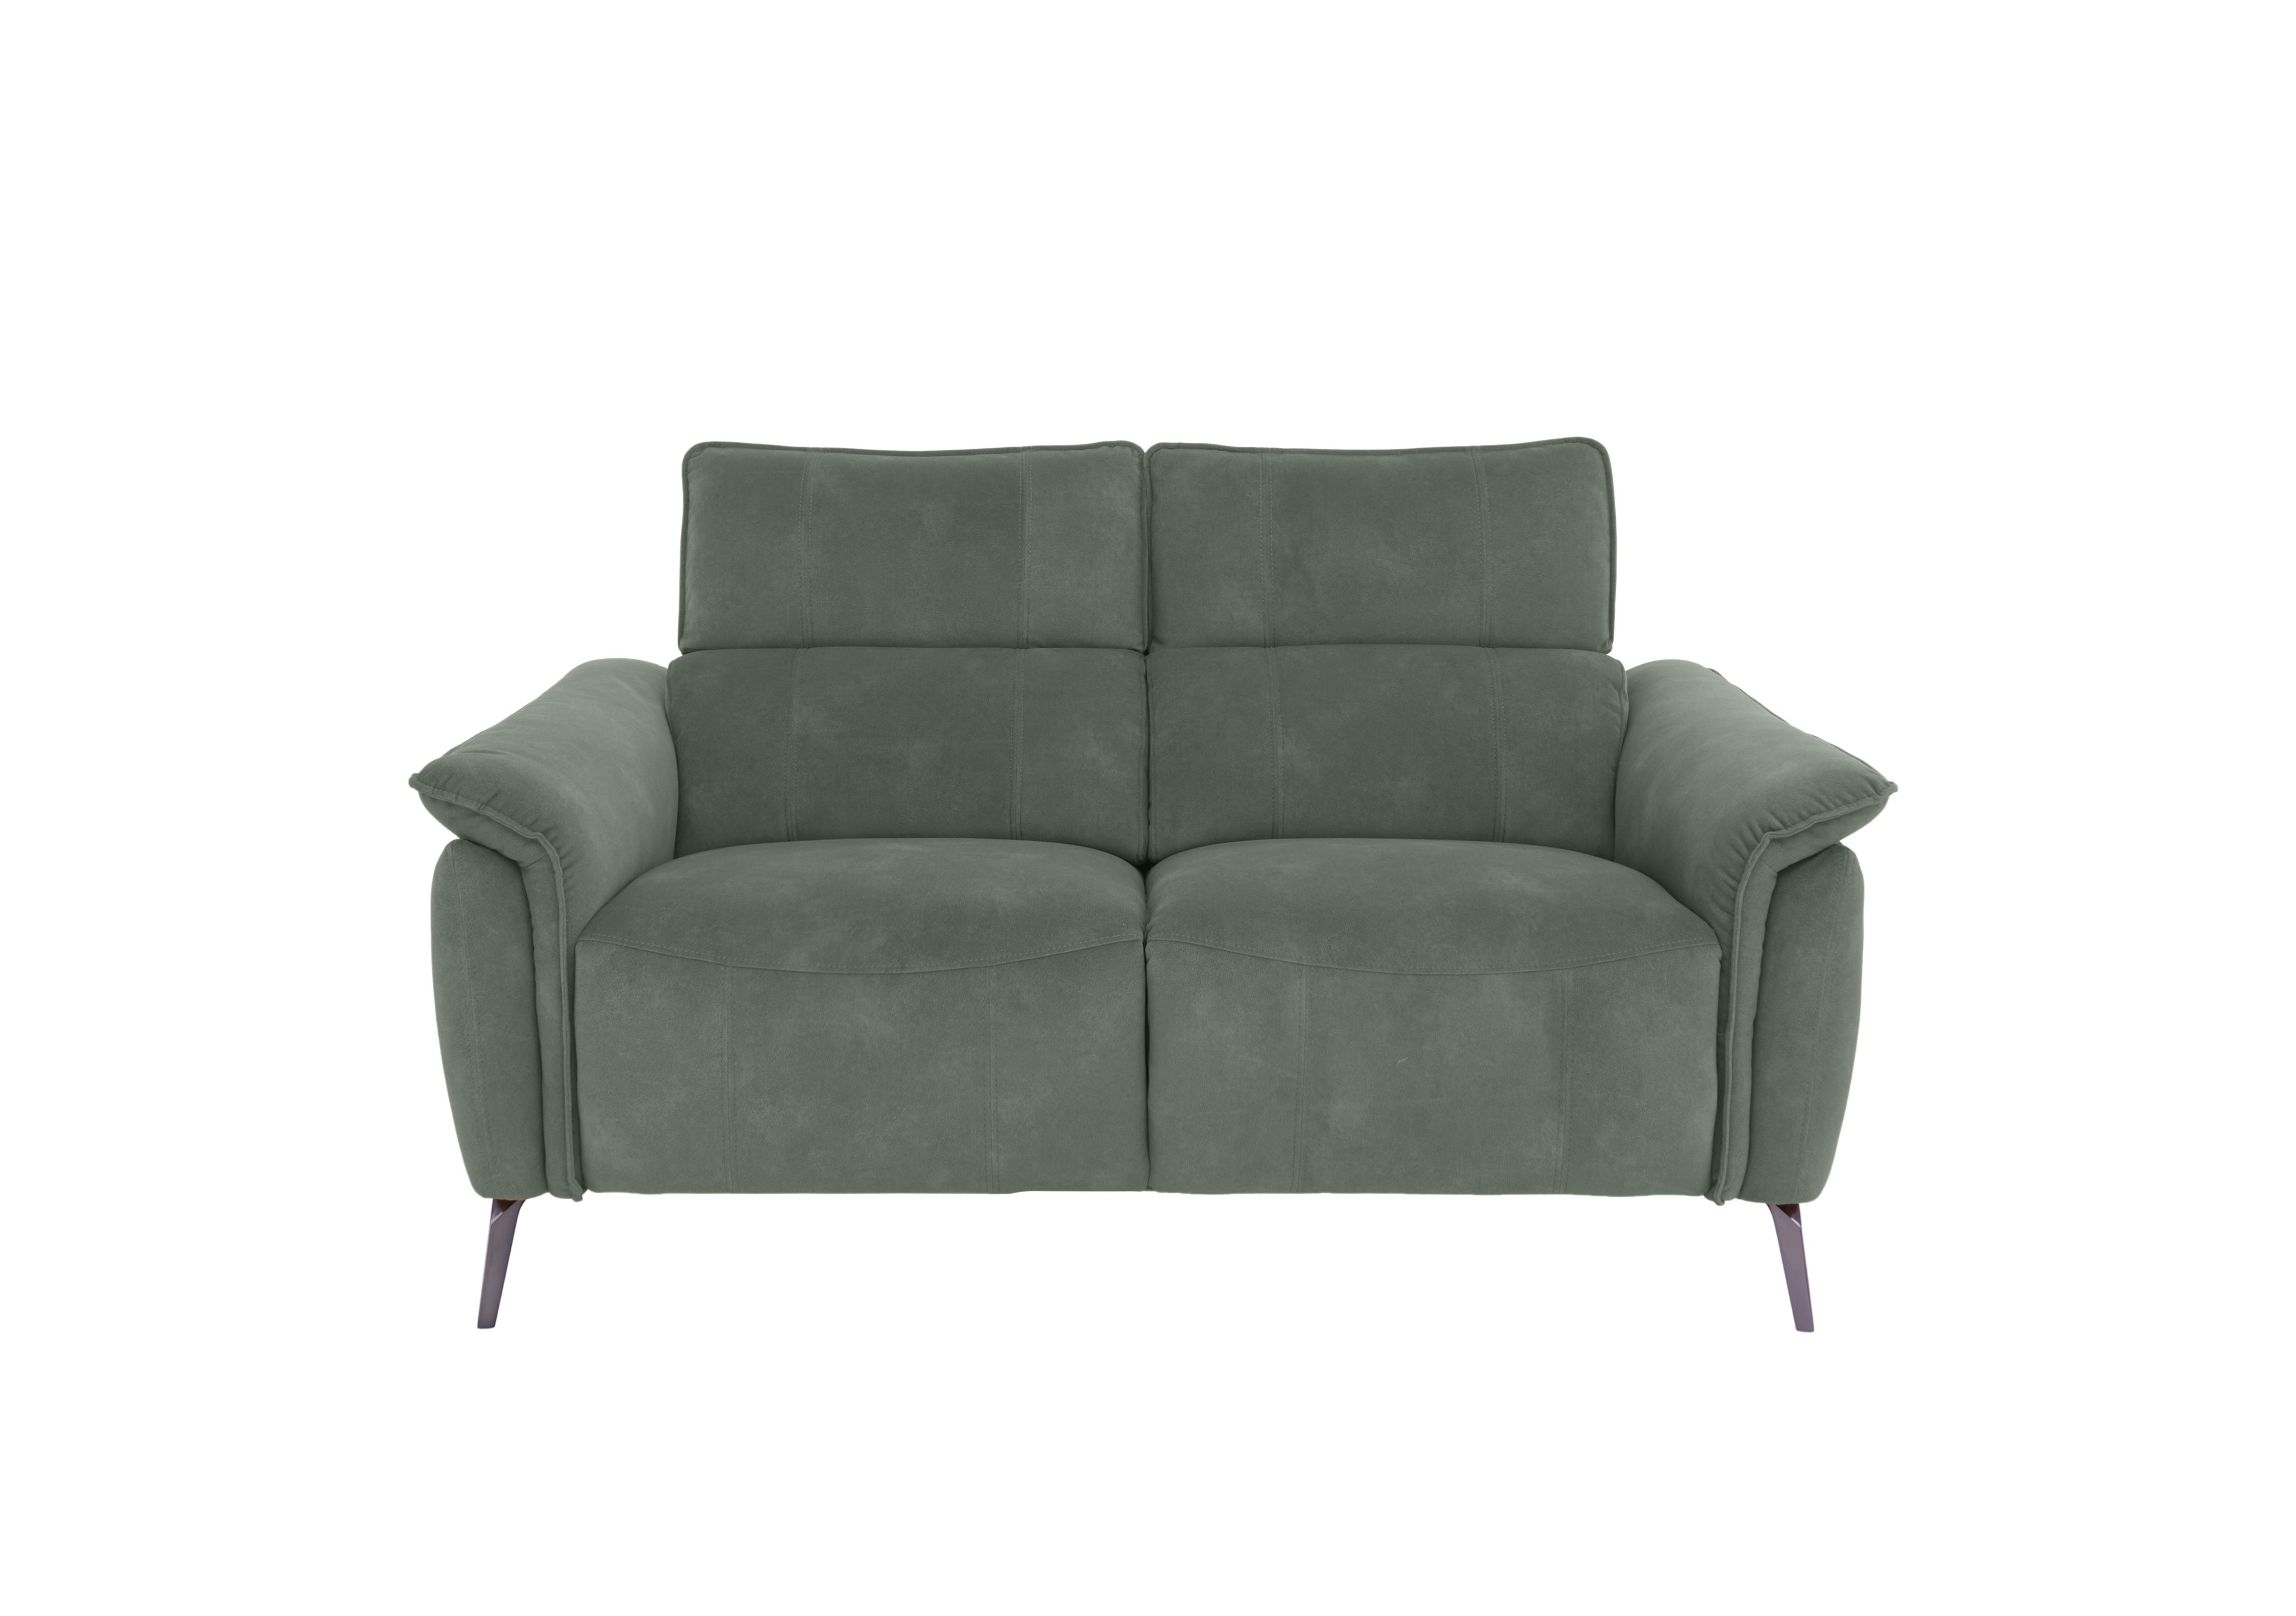 Jude 2 Seater Fabric Sofa in Fern Dexter 14 43514 on Furniture Village